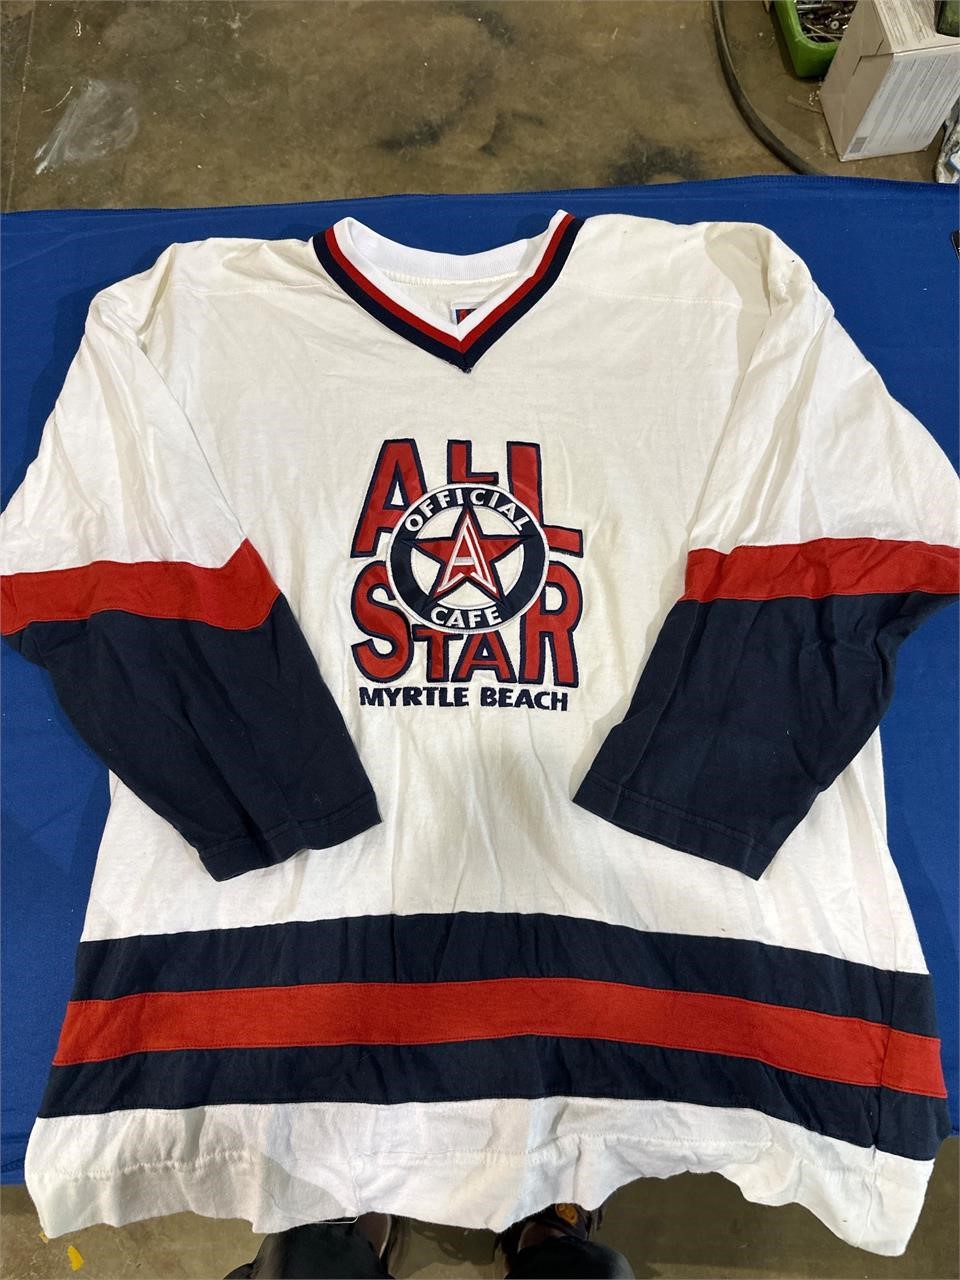 Vintage All-Star Cafe Hockey Jersey style shirt XL